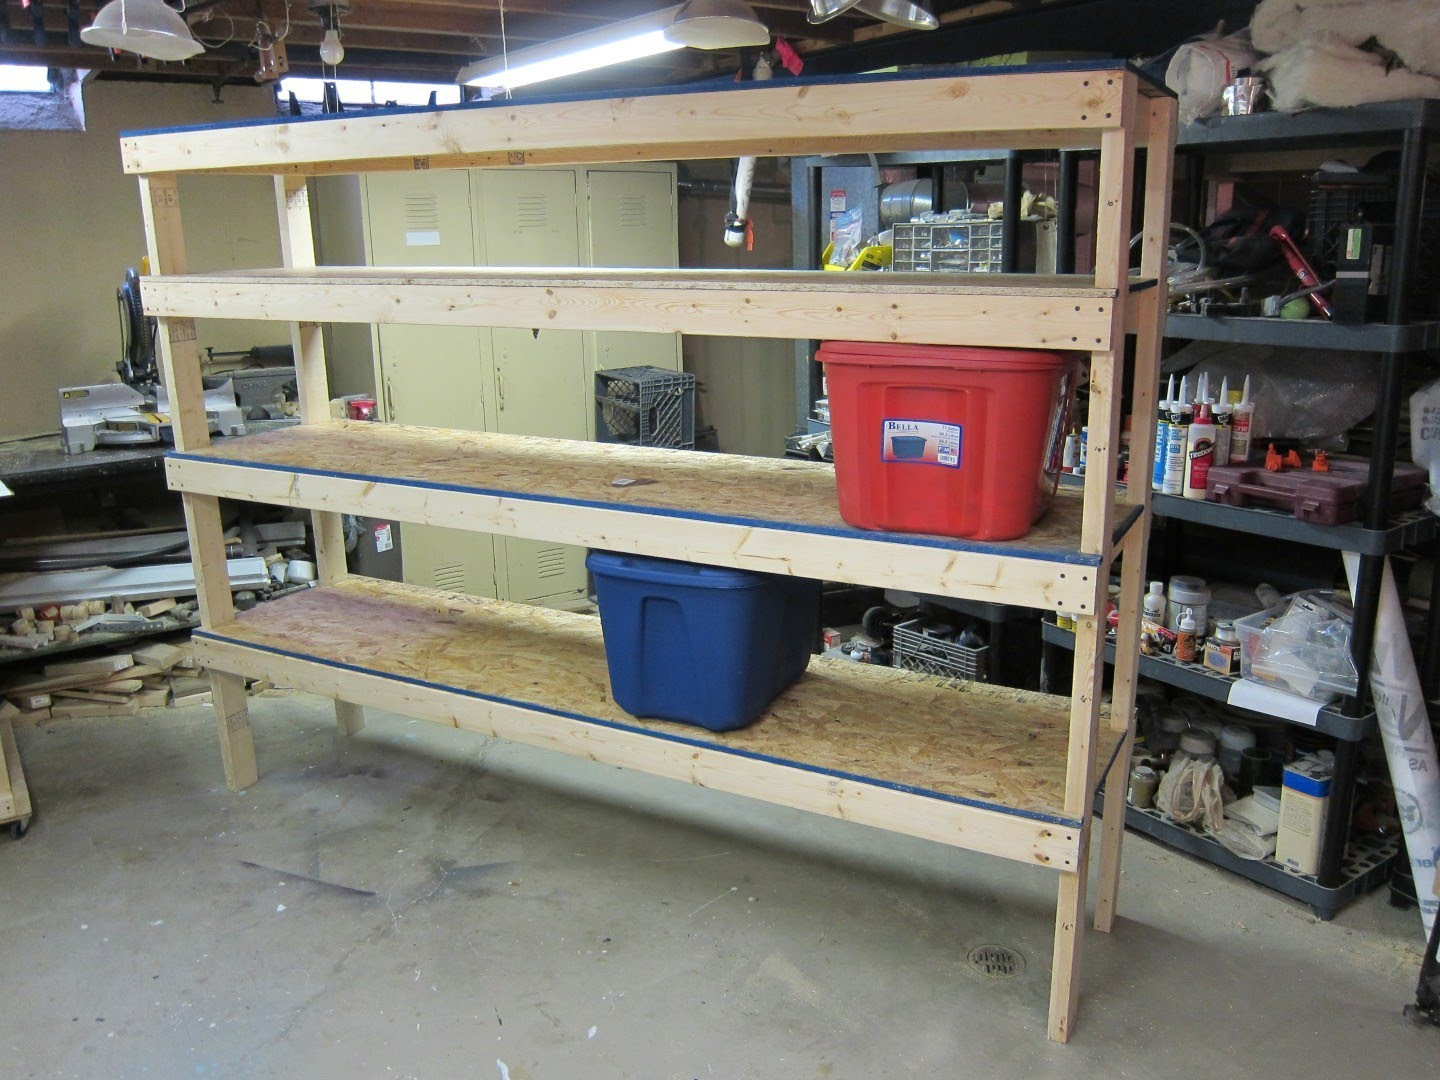 Best ideas about Diy Garage Storage
. Save or Pin 20 DIY Garage Shelving Ideas Now.